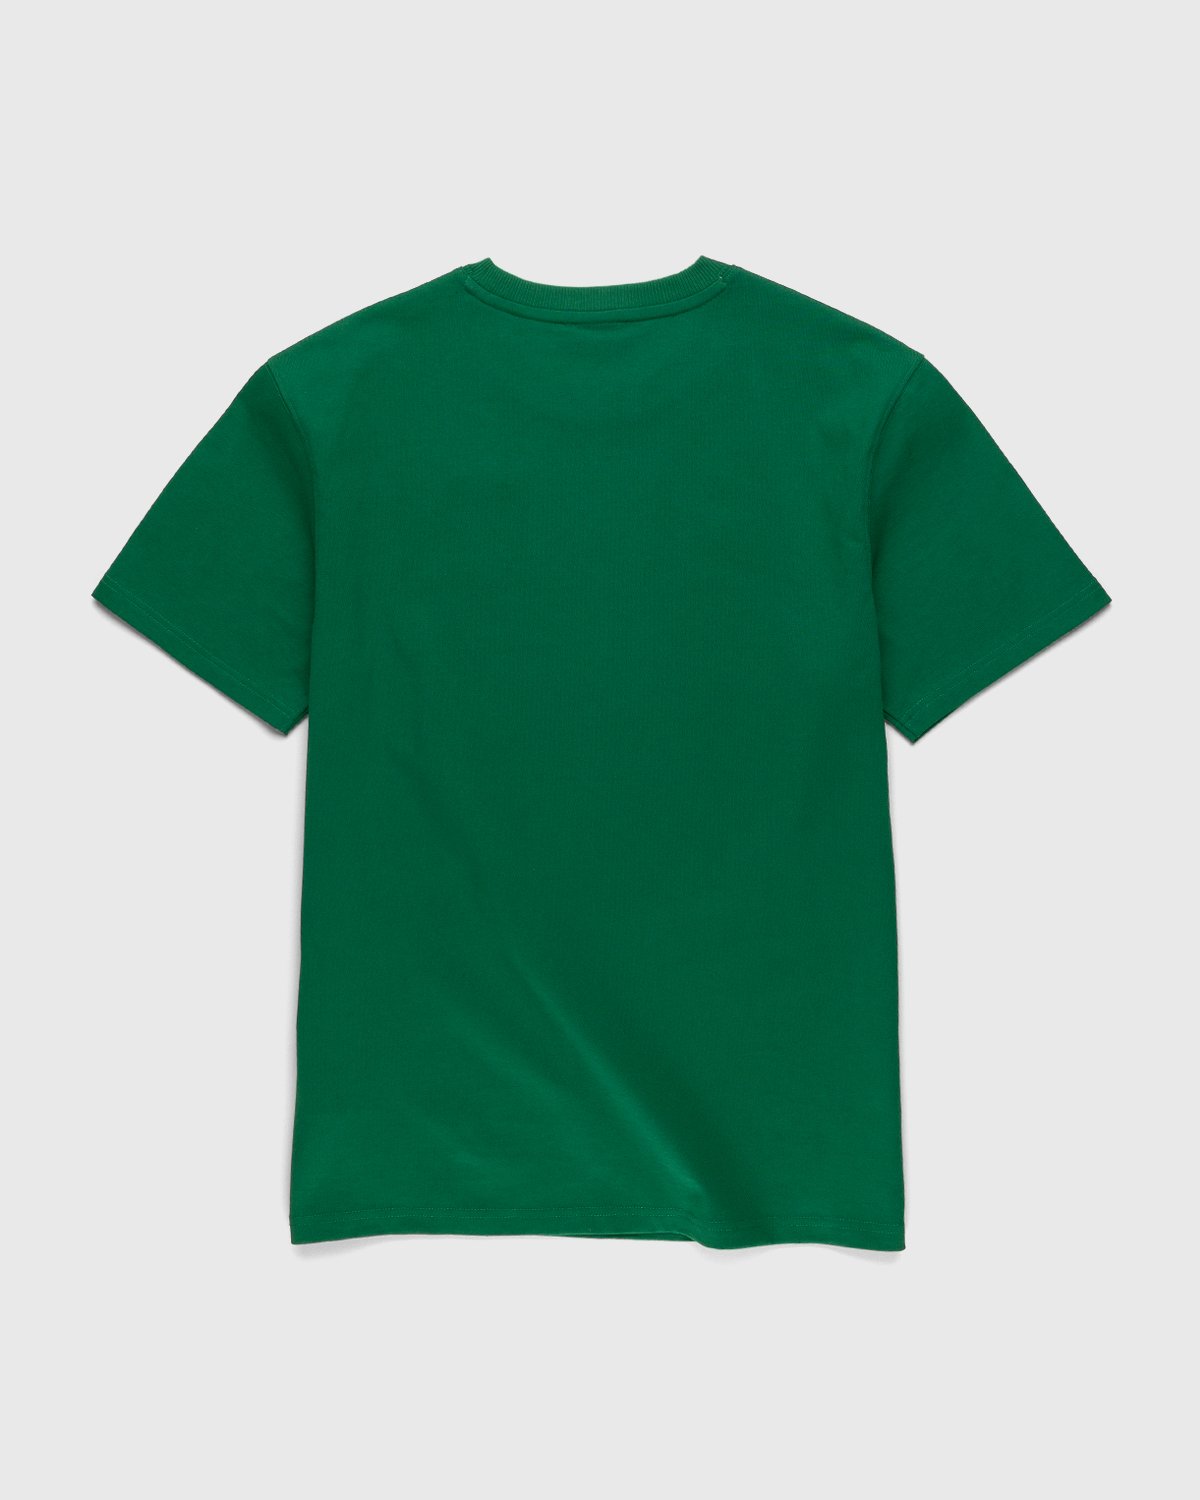 Puma x AMI - Graphic Logo Tee Verdant Green - Clothing - Green - Image 2